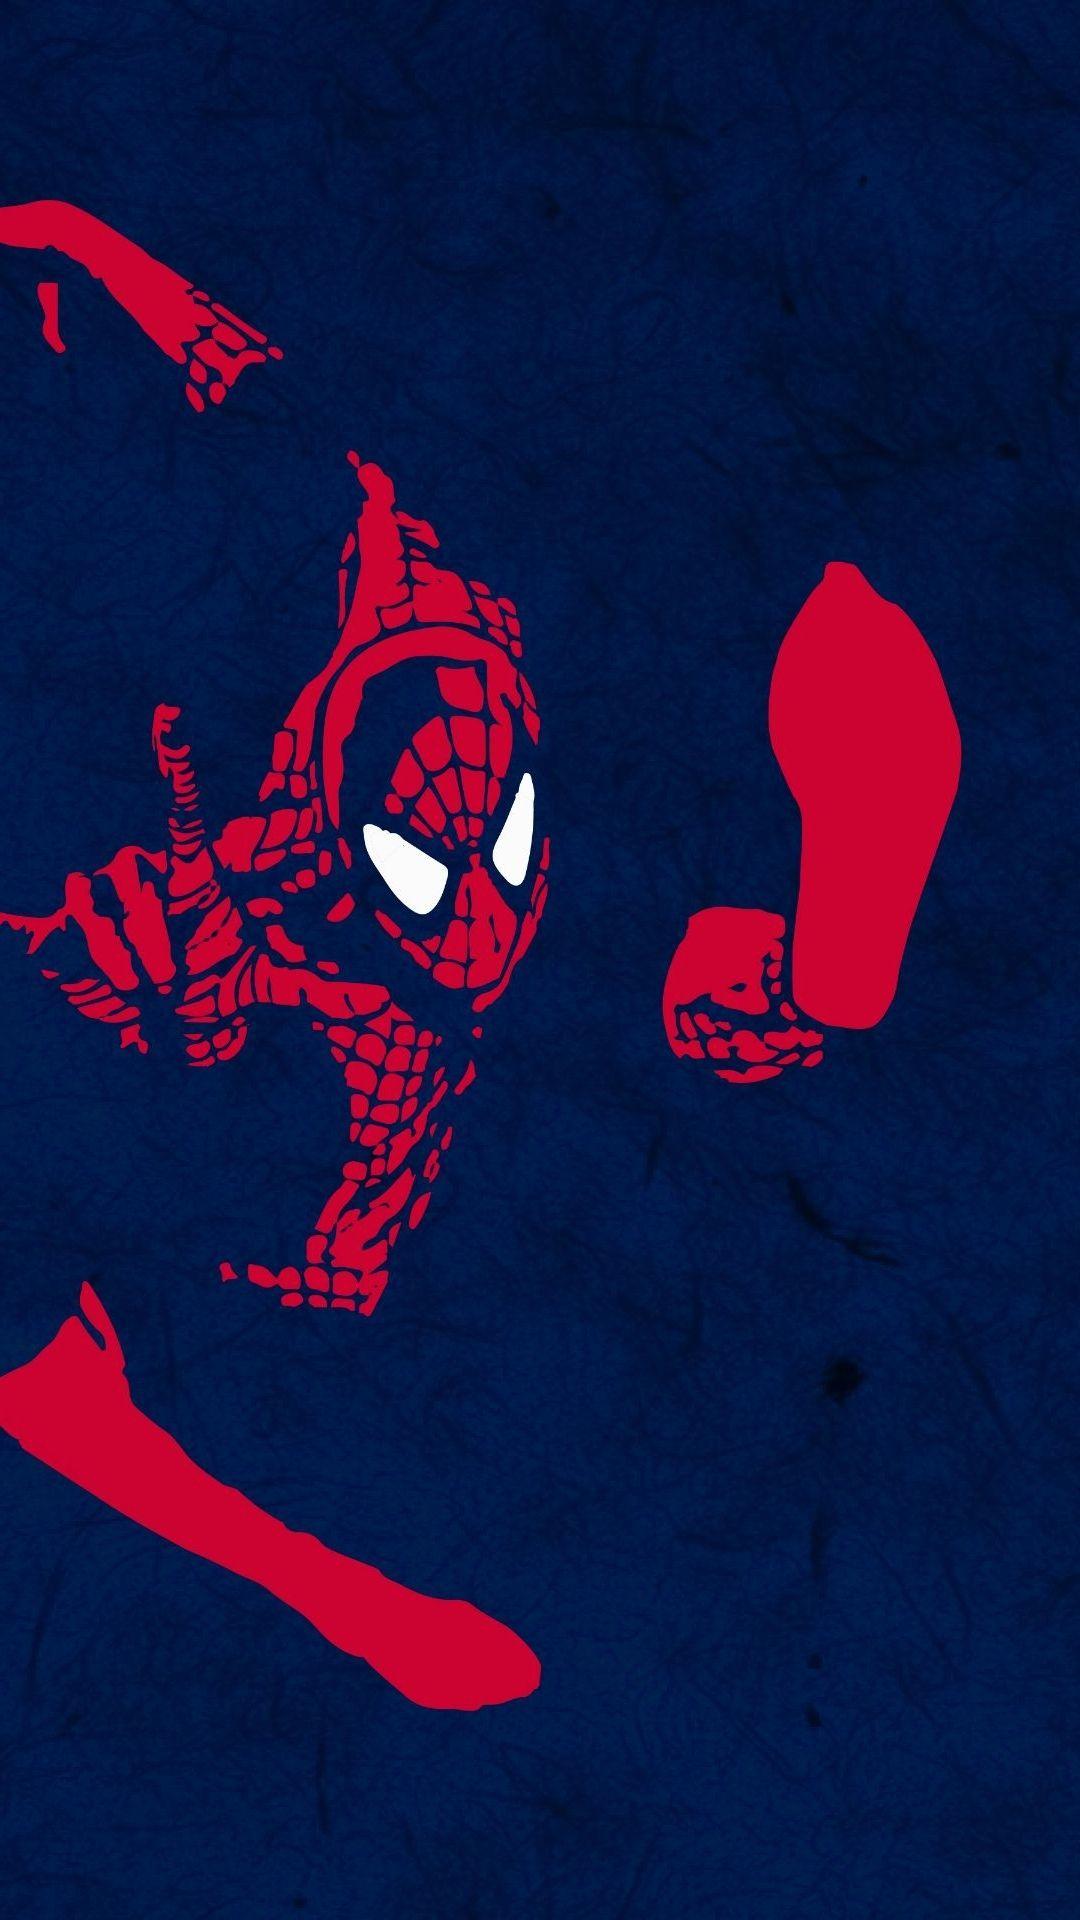 Classic Spider Man Wallpaper Free Classic Spider Man